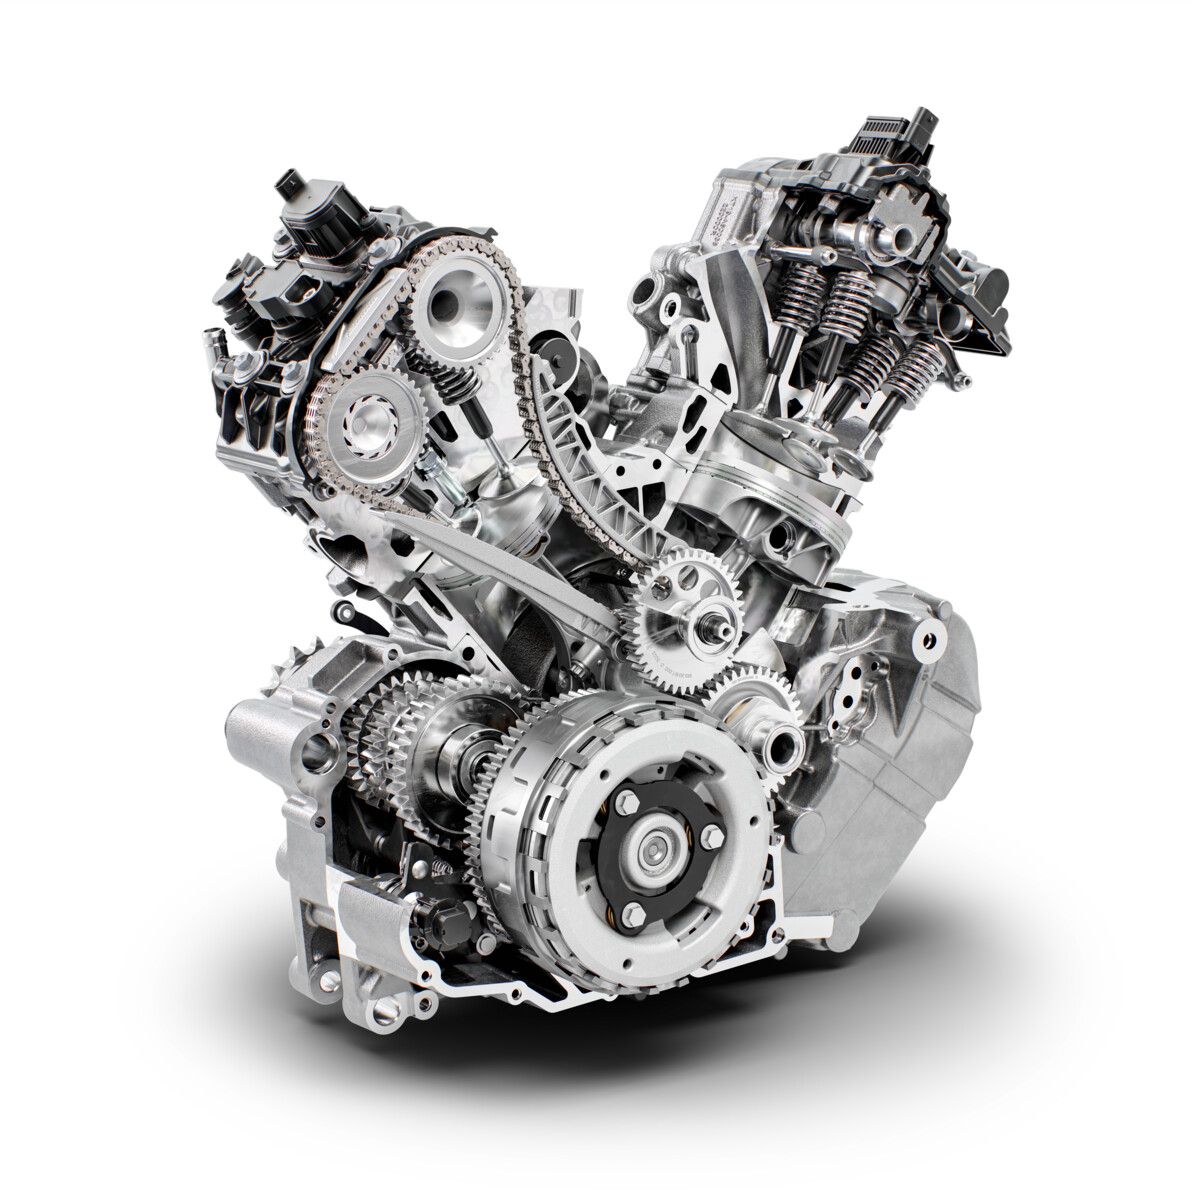 561705 MY24 KTM 1390 SUPER DUKE R EngineStripped Details Parts DETAILS PARTS